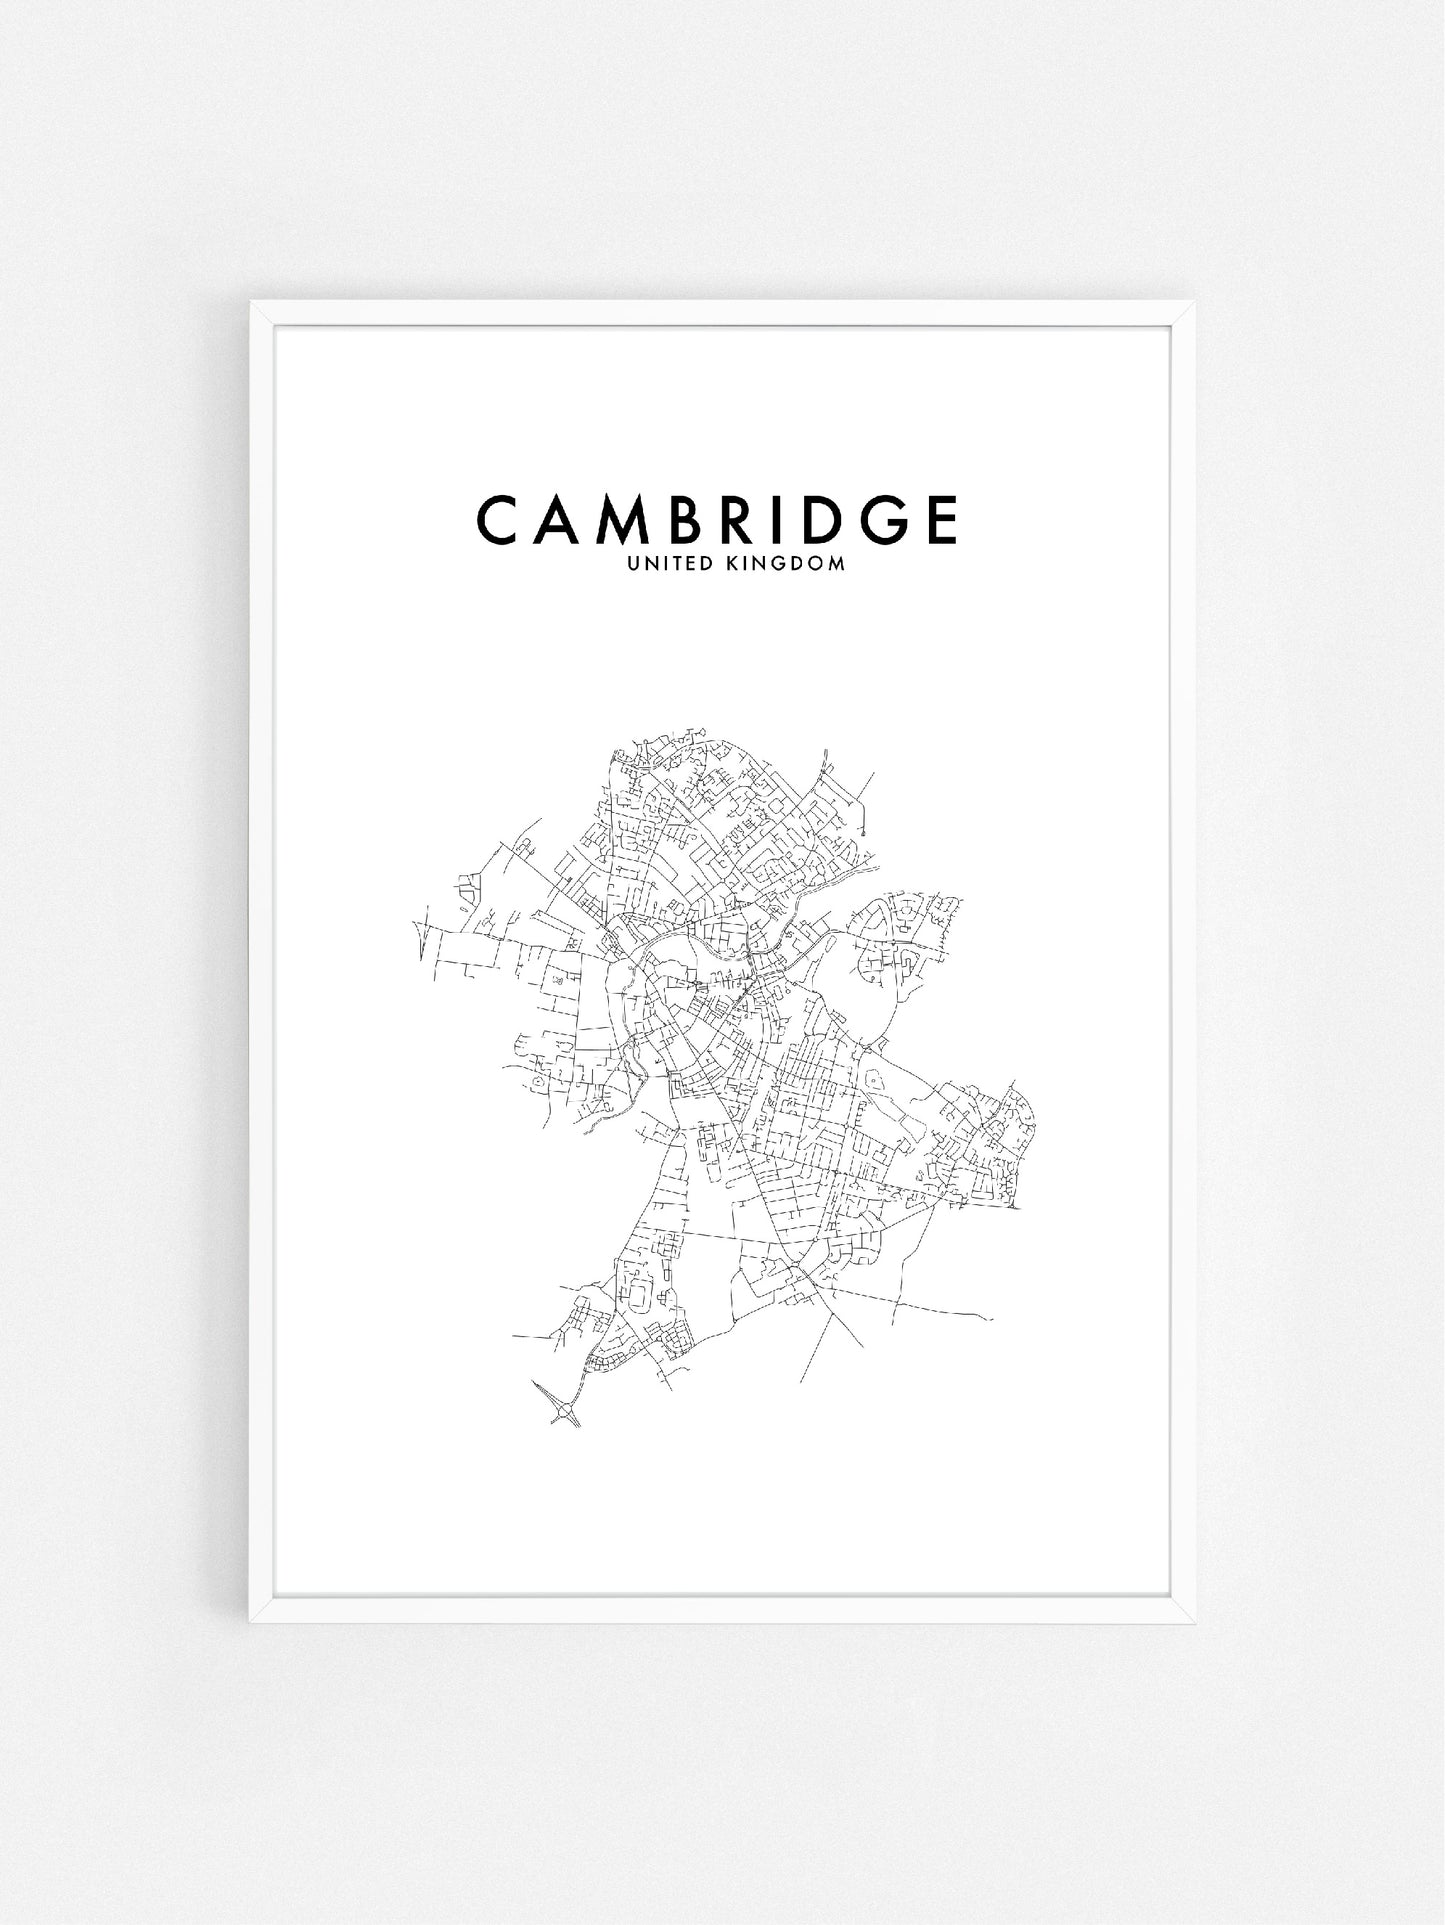 CAMBRIDGE, UK HOMETOWN PRINT